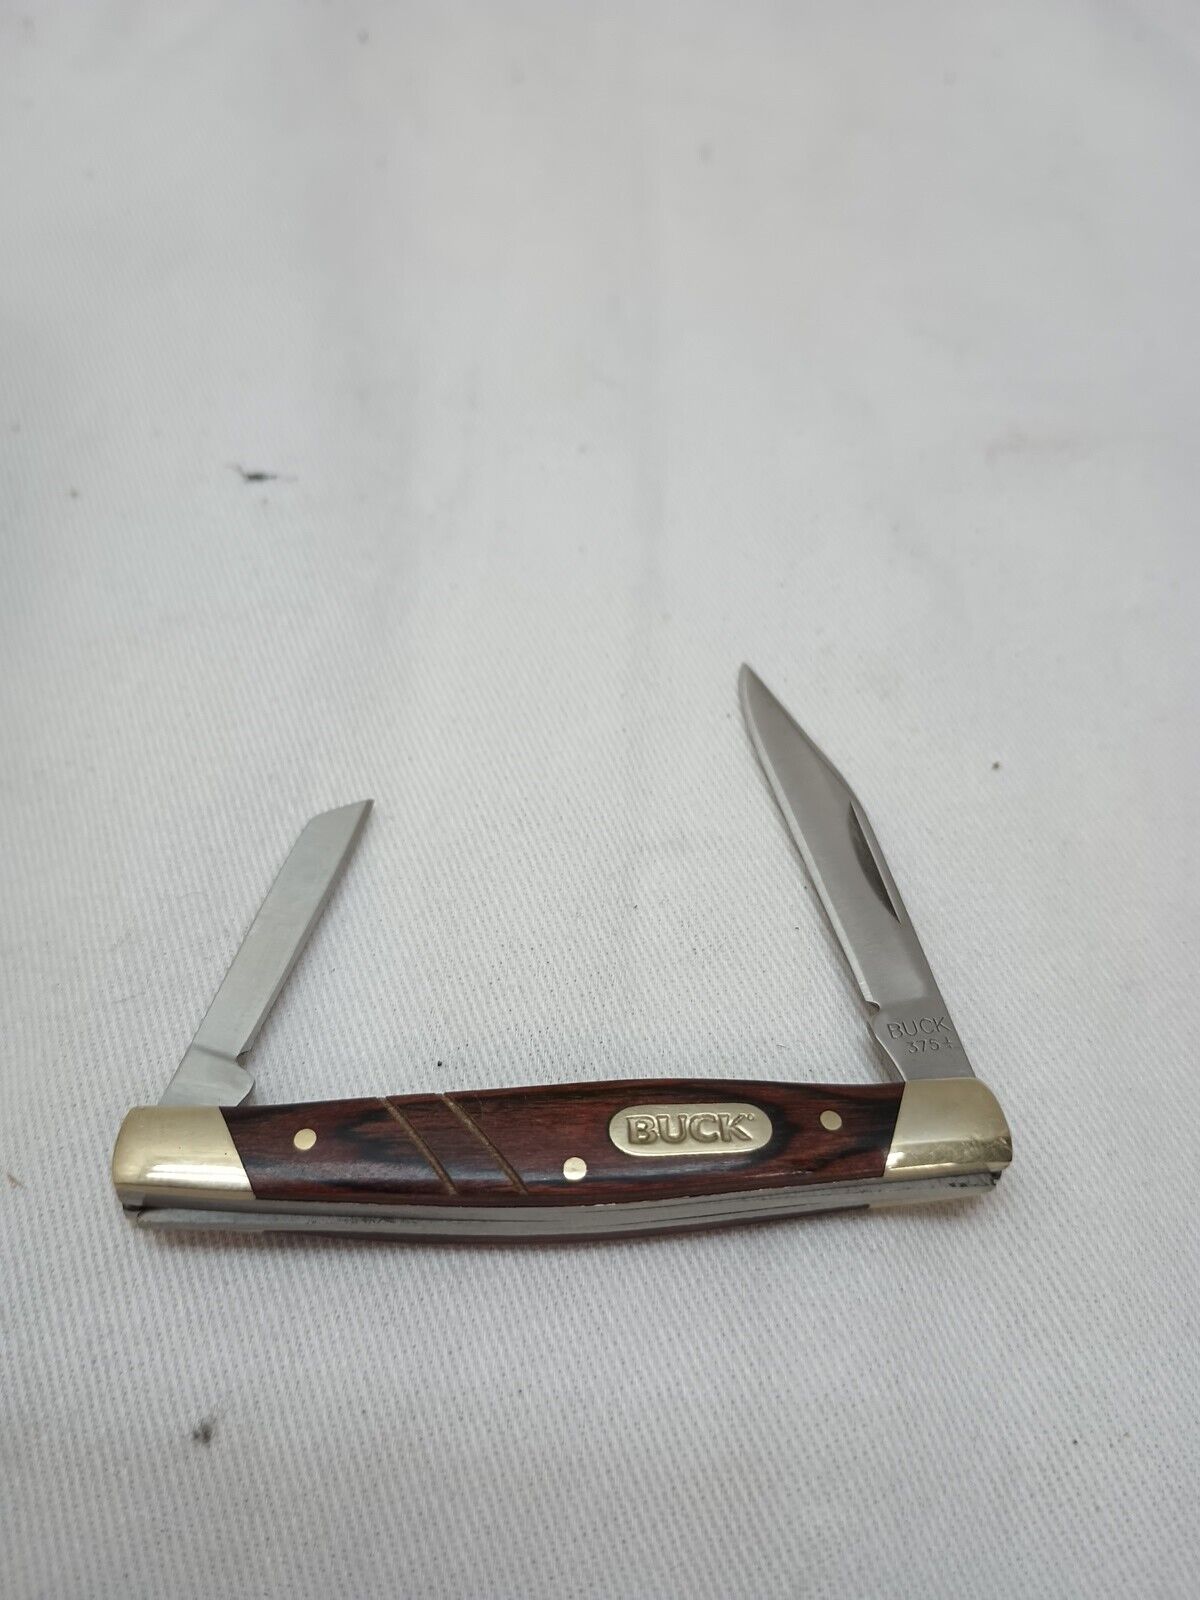 VINTAGE BUCK 375 - 2 BLADE POCKET KNIFE - EXCELLENT Condition